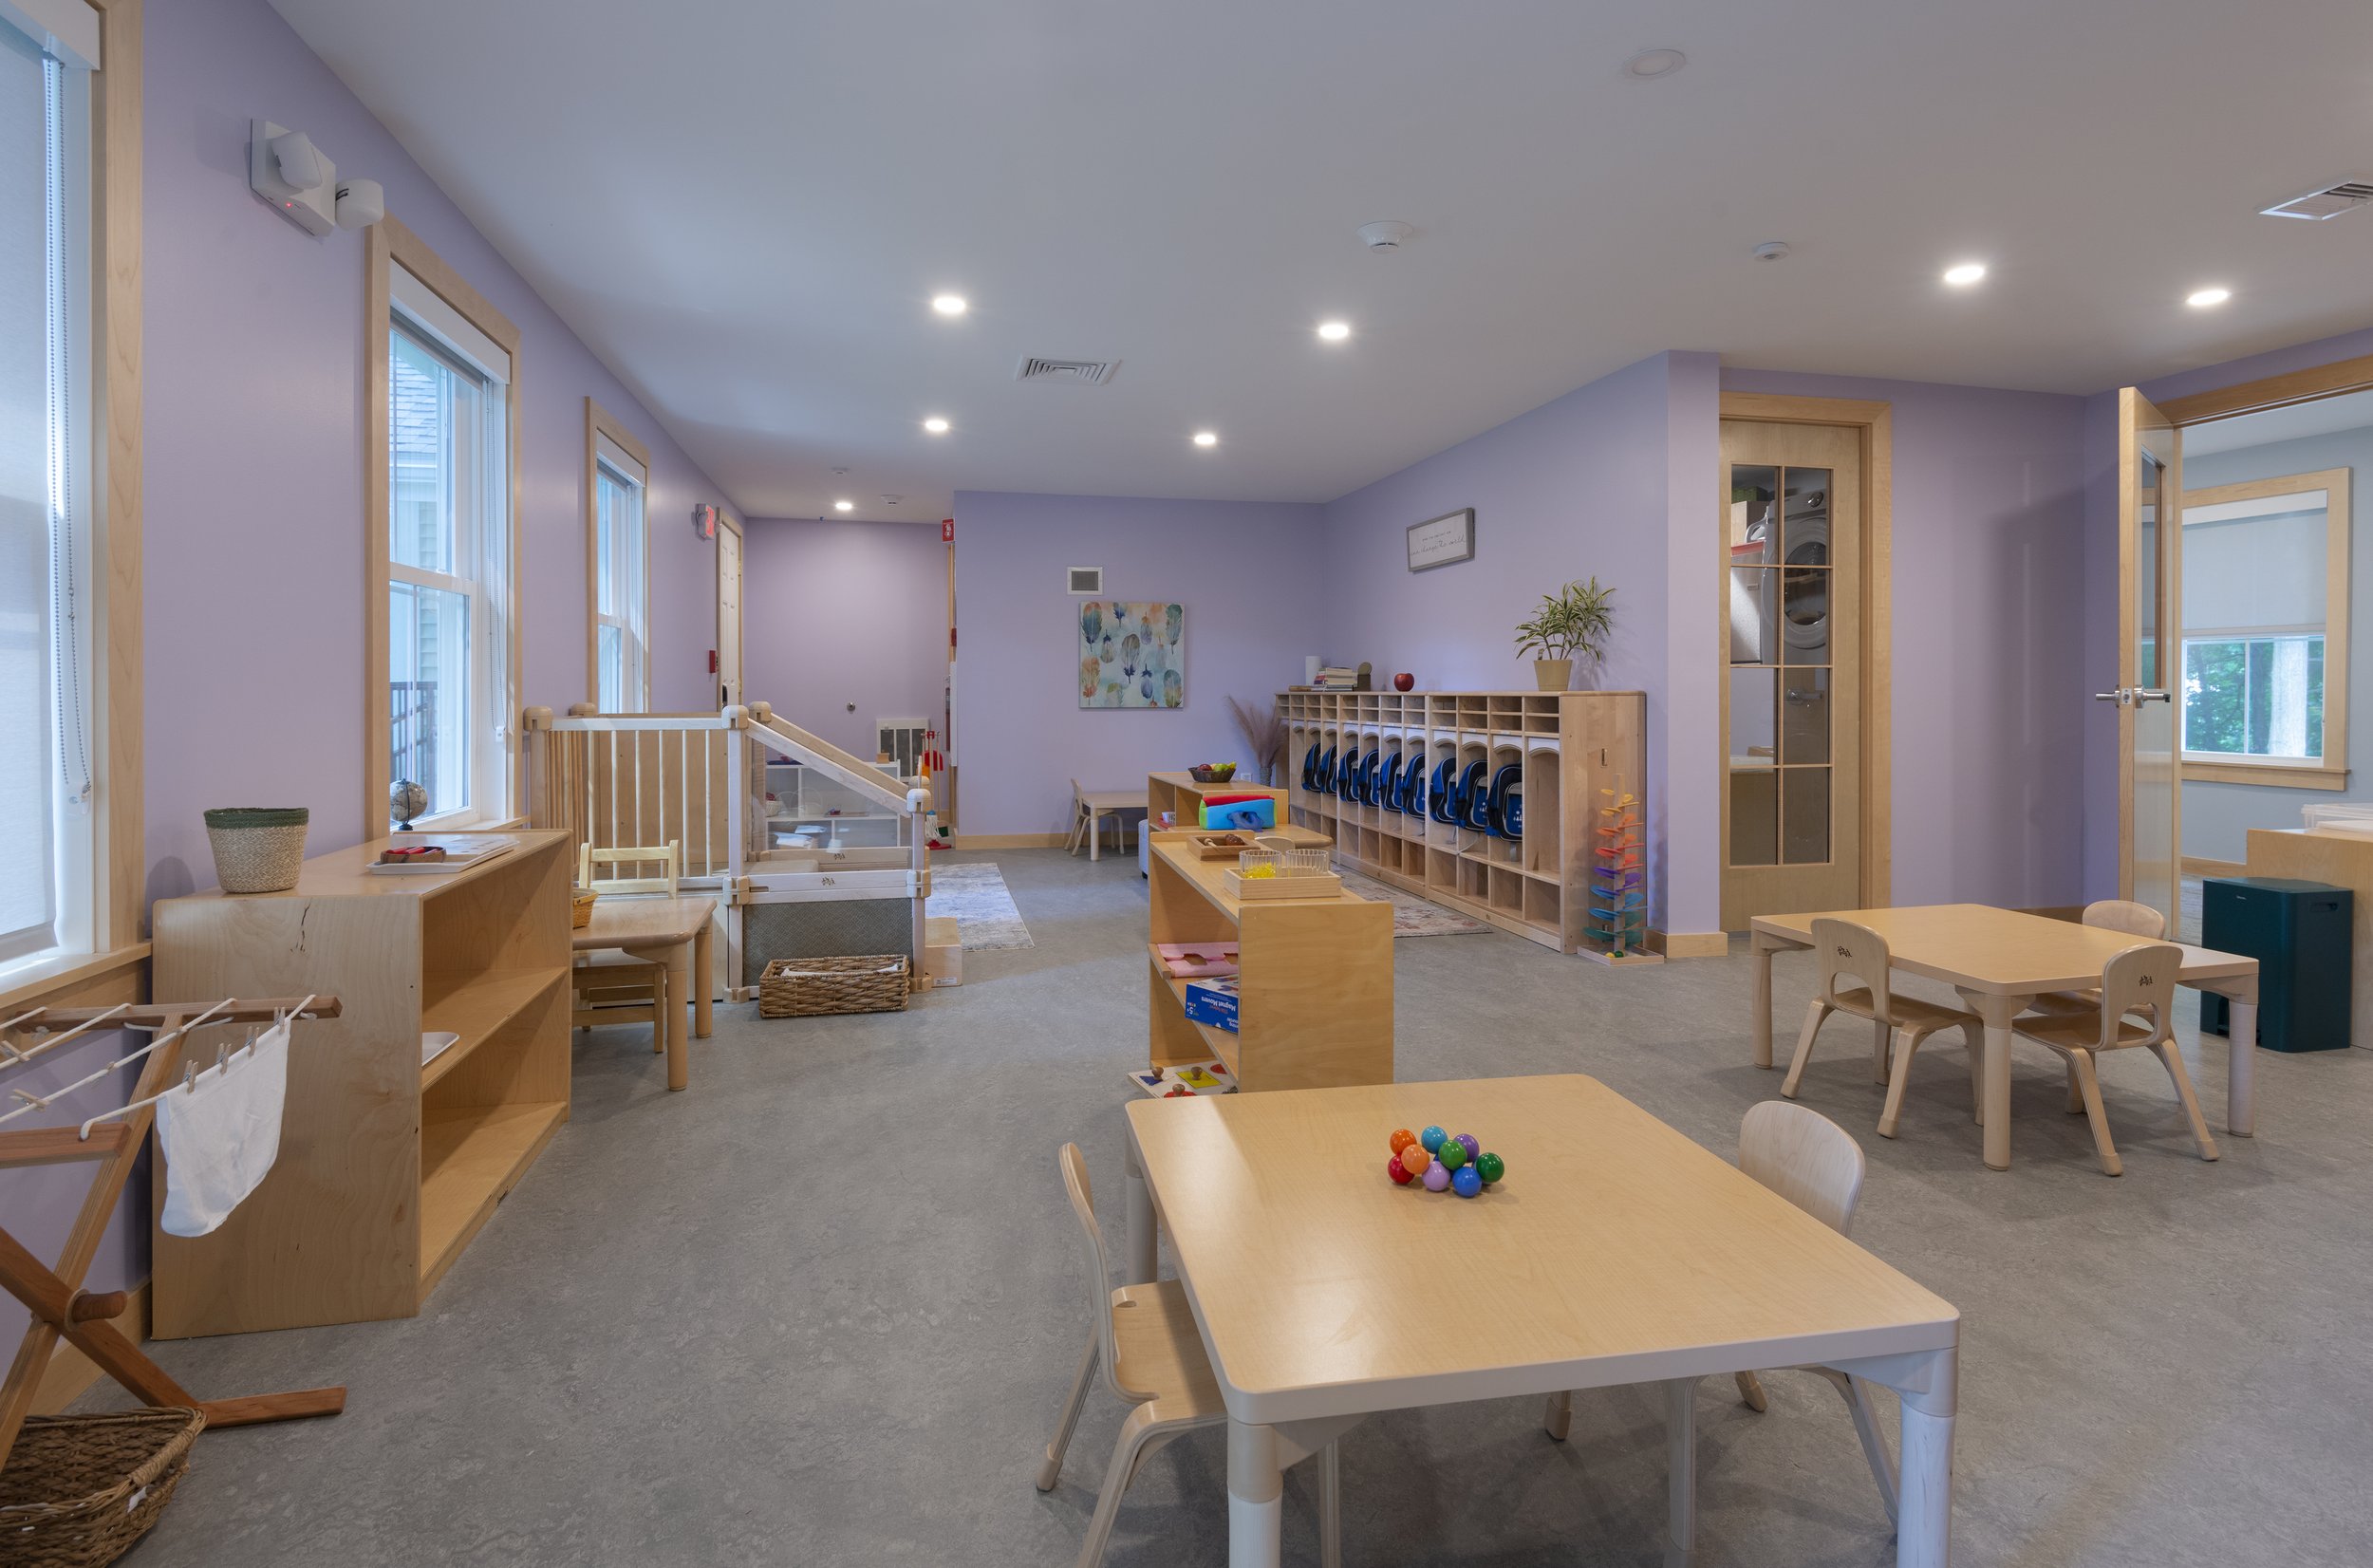  Summit Montessori master planned expansion 